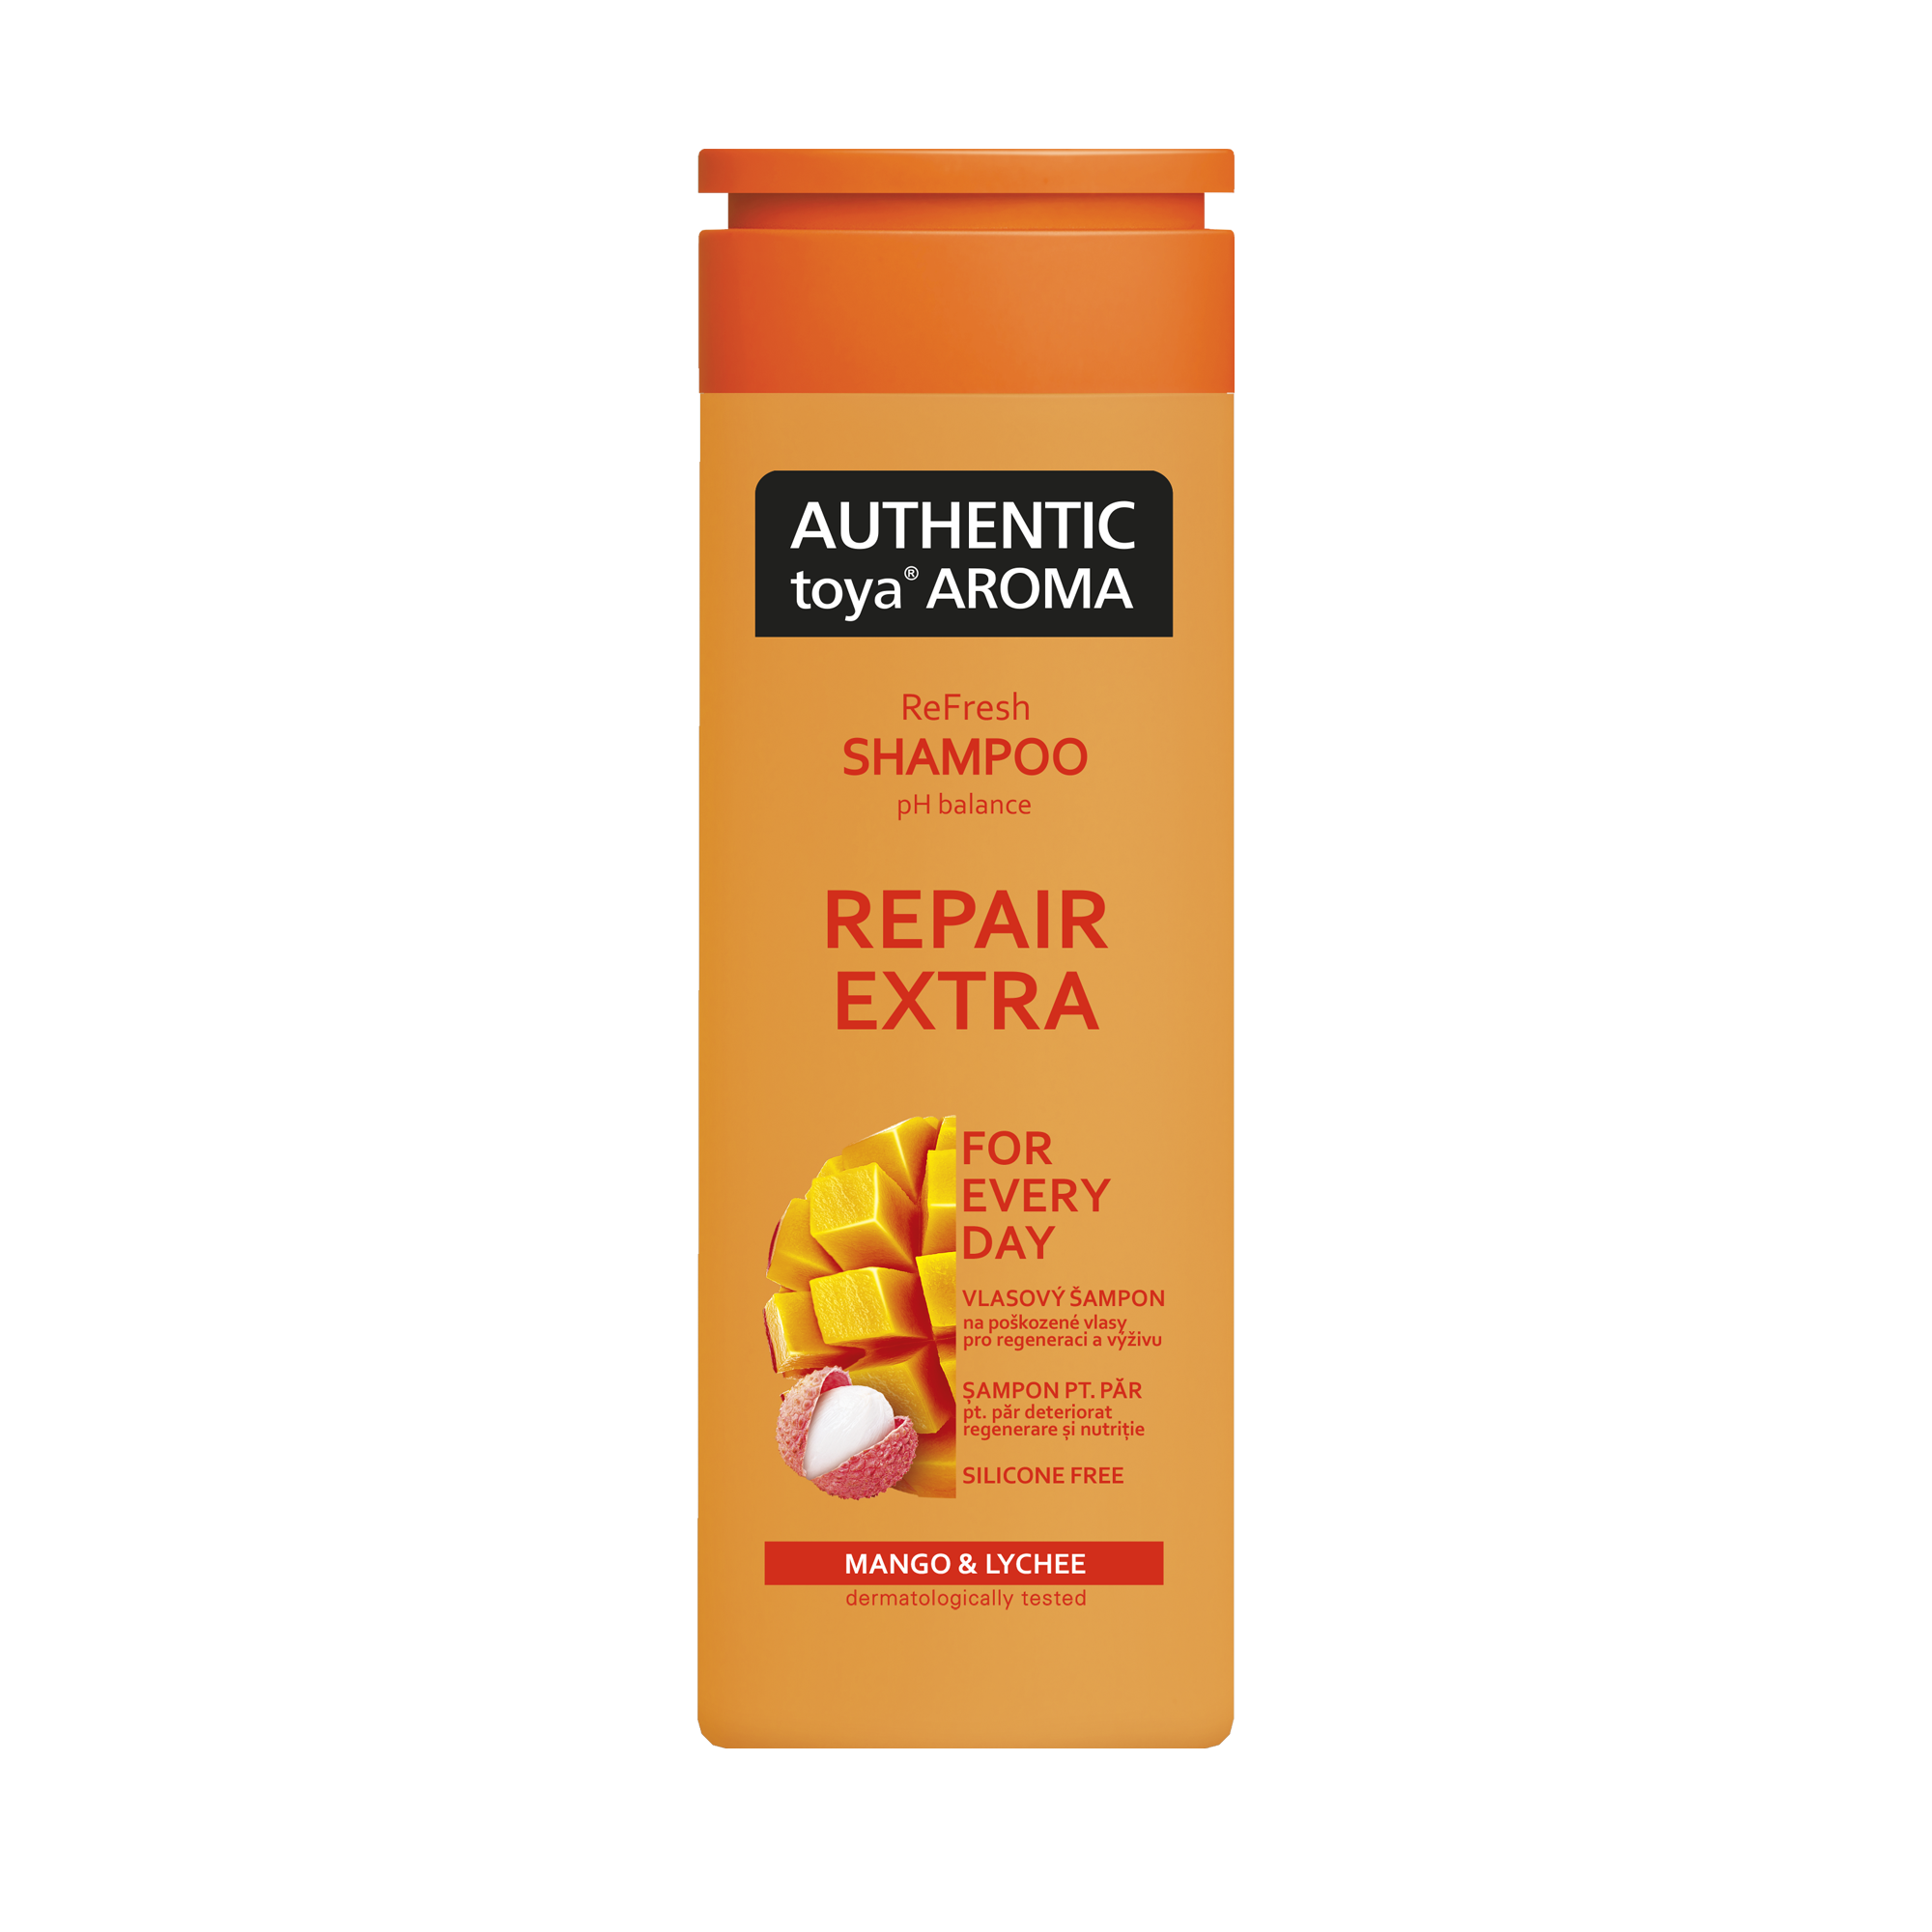 AUTHENTIC toya AROMA Repair Extra shampoo